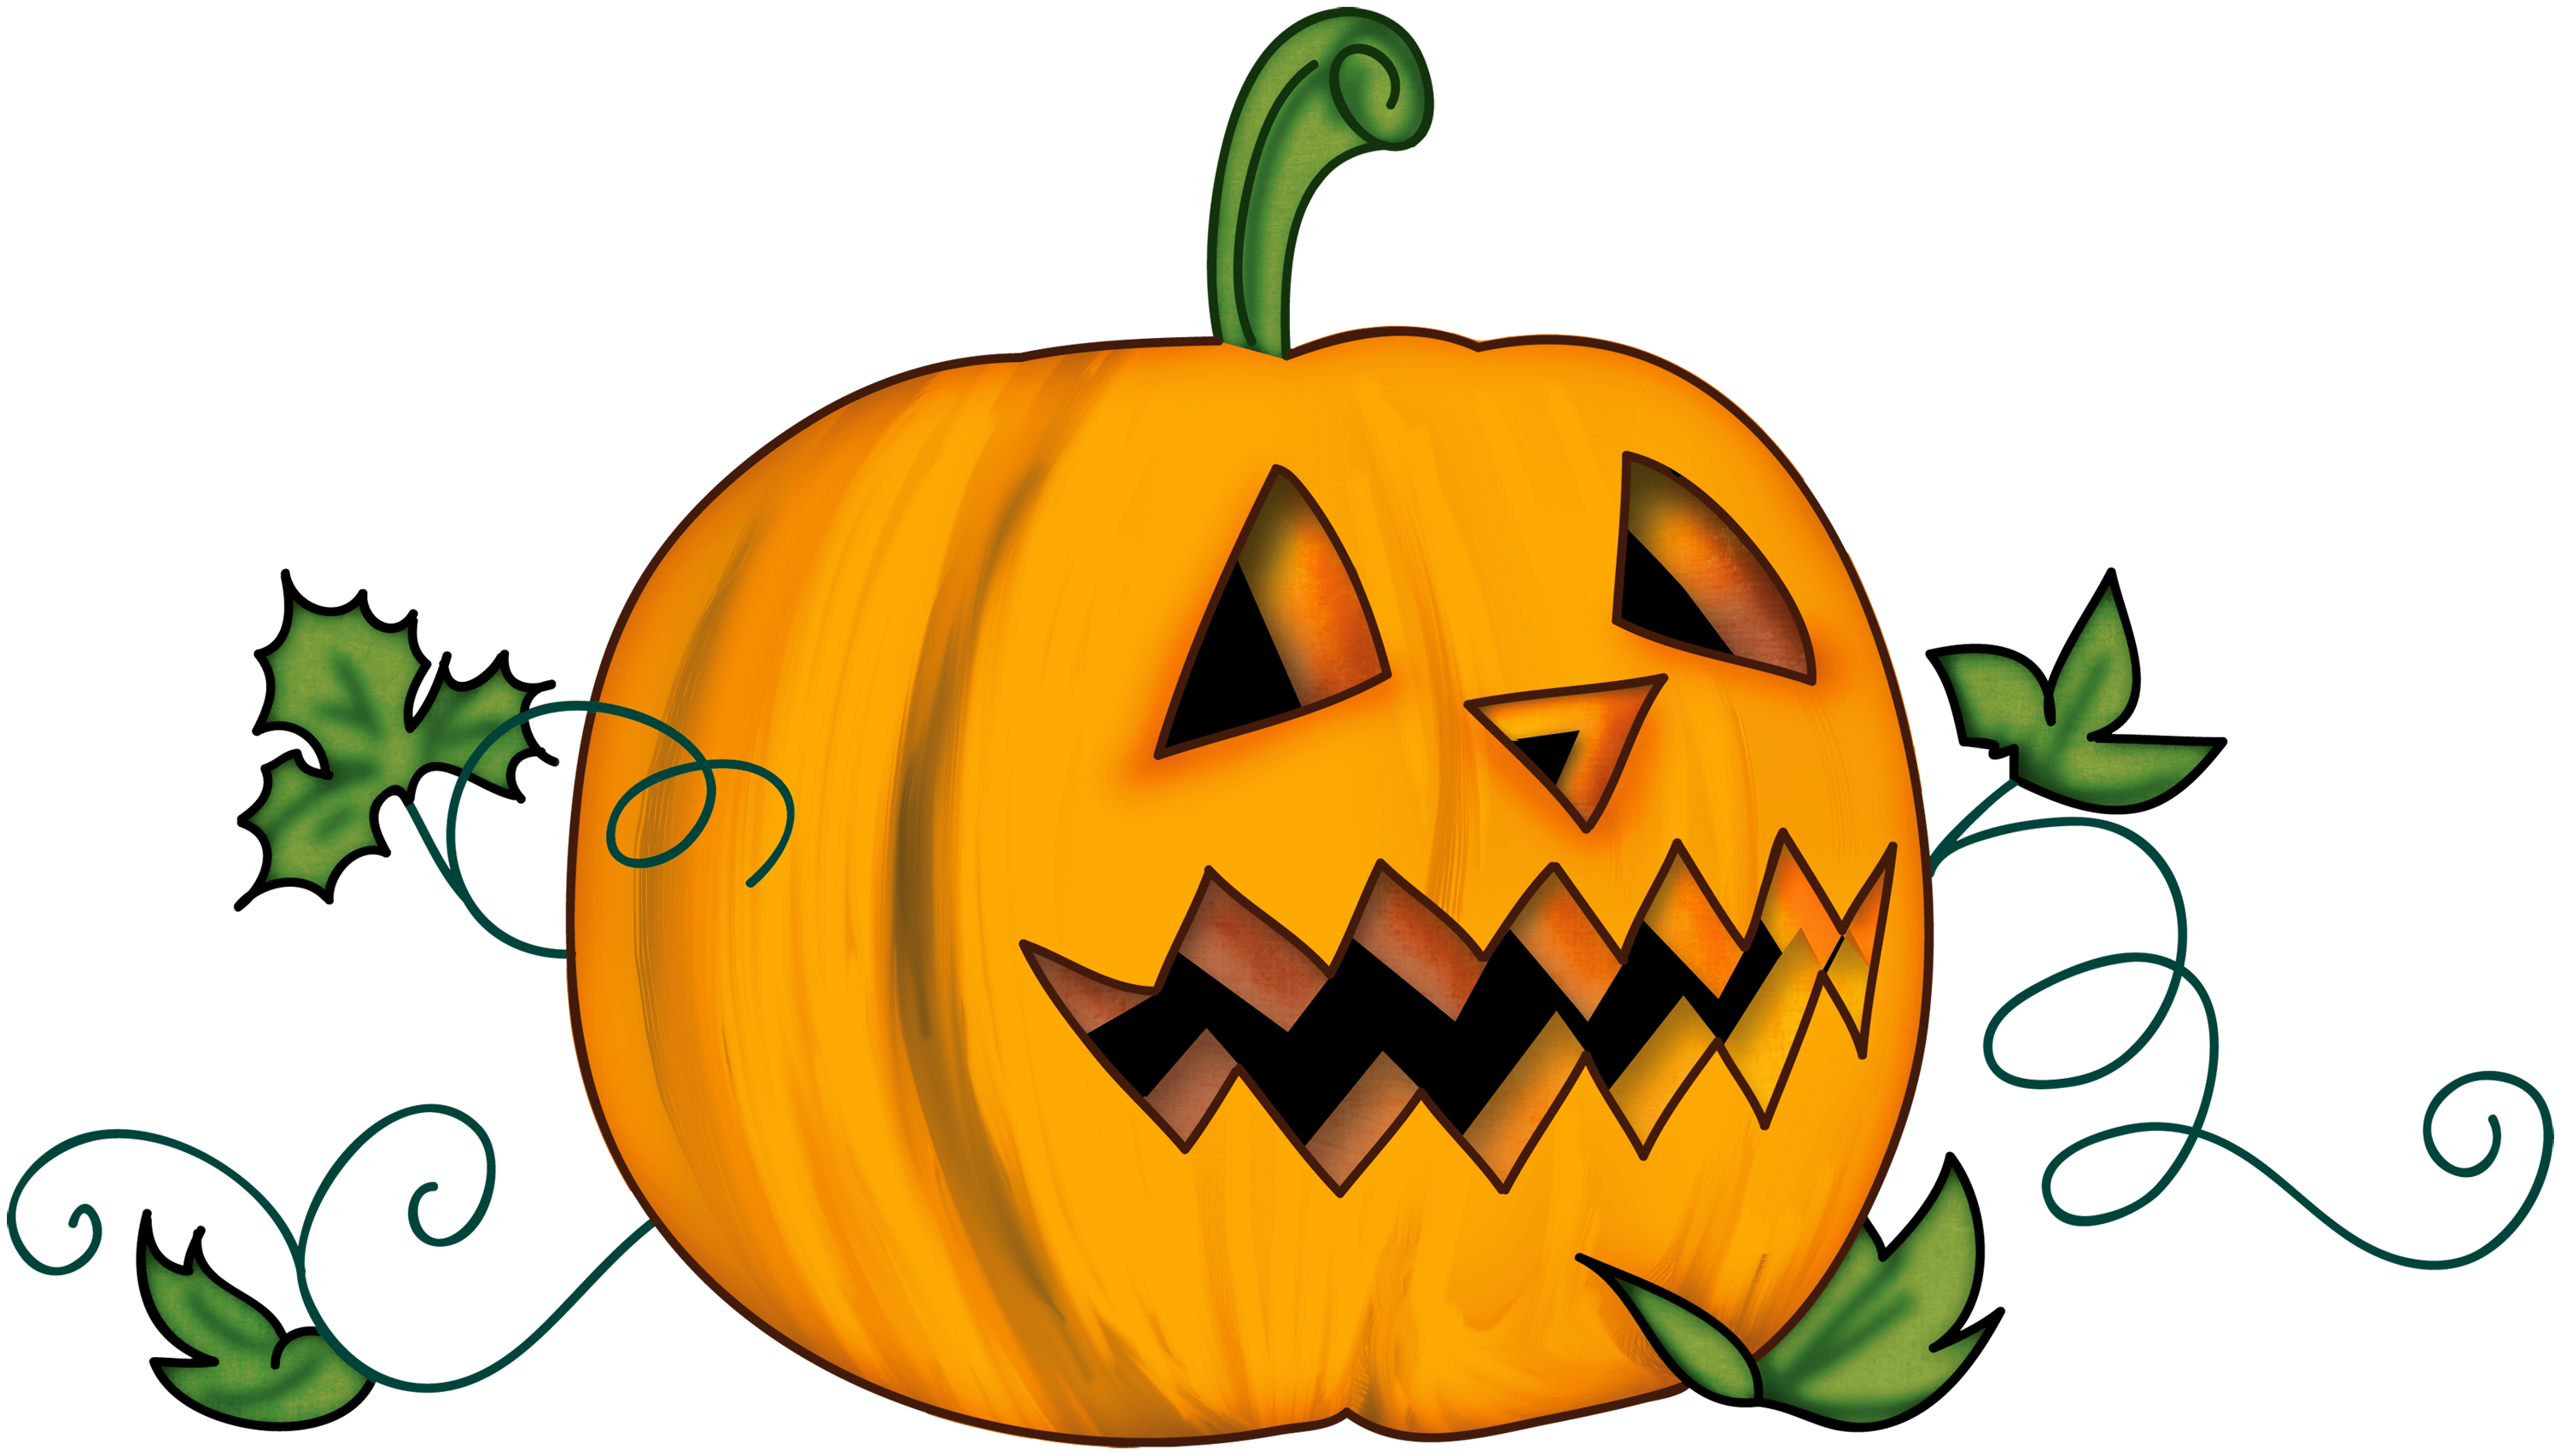 Halloween Creepy Pumpkin Clipart